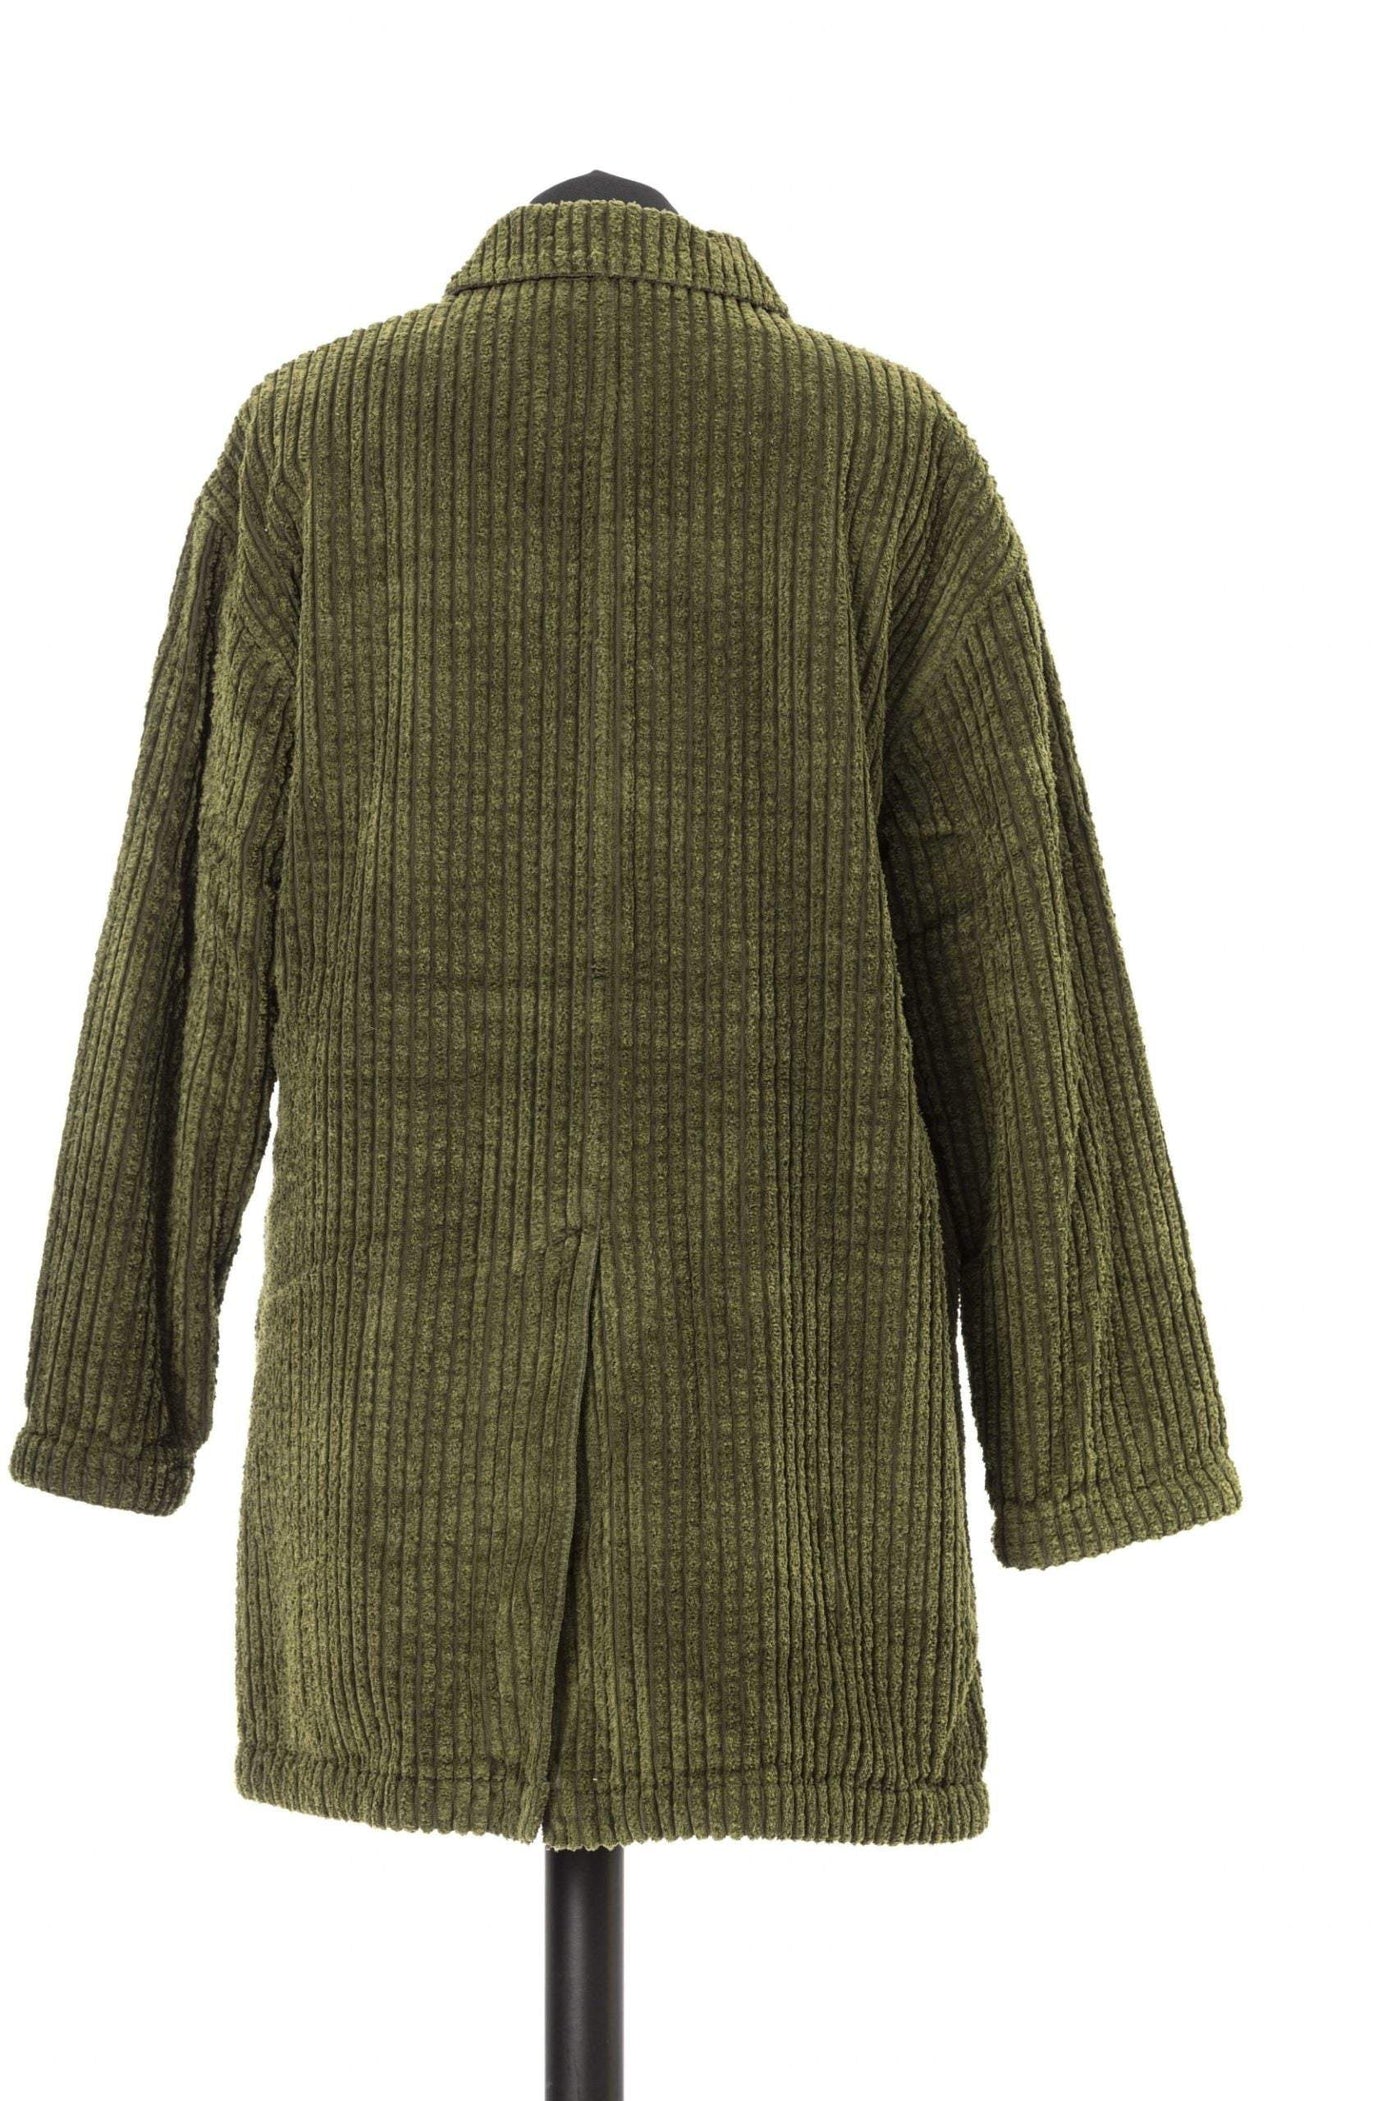 Jacob Cohen Green Cotton Jackets & Coat feed-1, Green, IT40 | XS, IT42 | S, IT44 | M, IT46 | L, Jackets & Coats - Women - Clothing, Jacob Cohen at SEYMAYKA